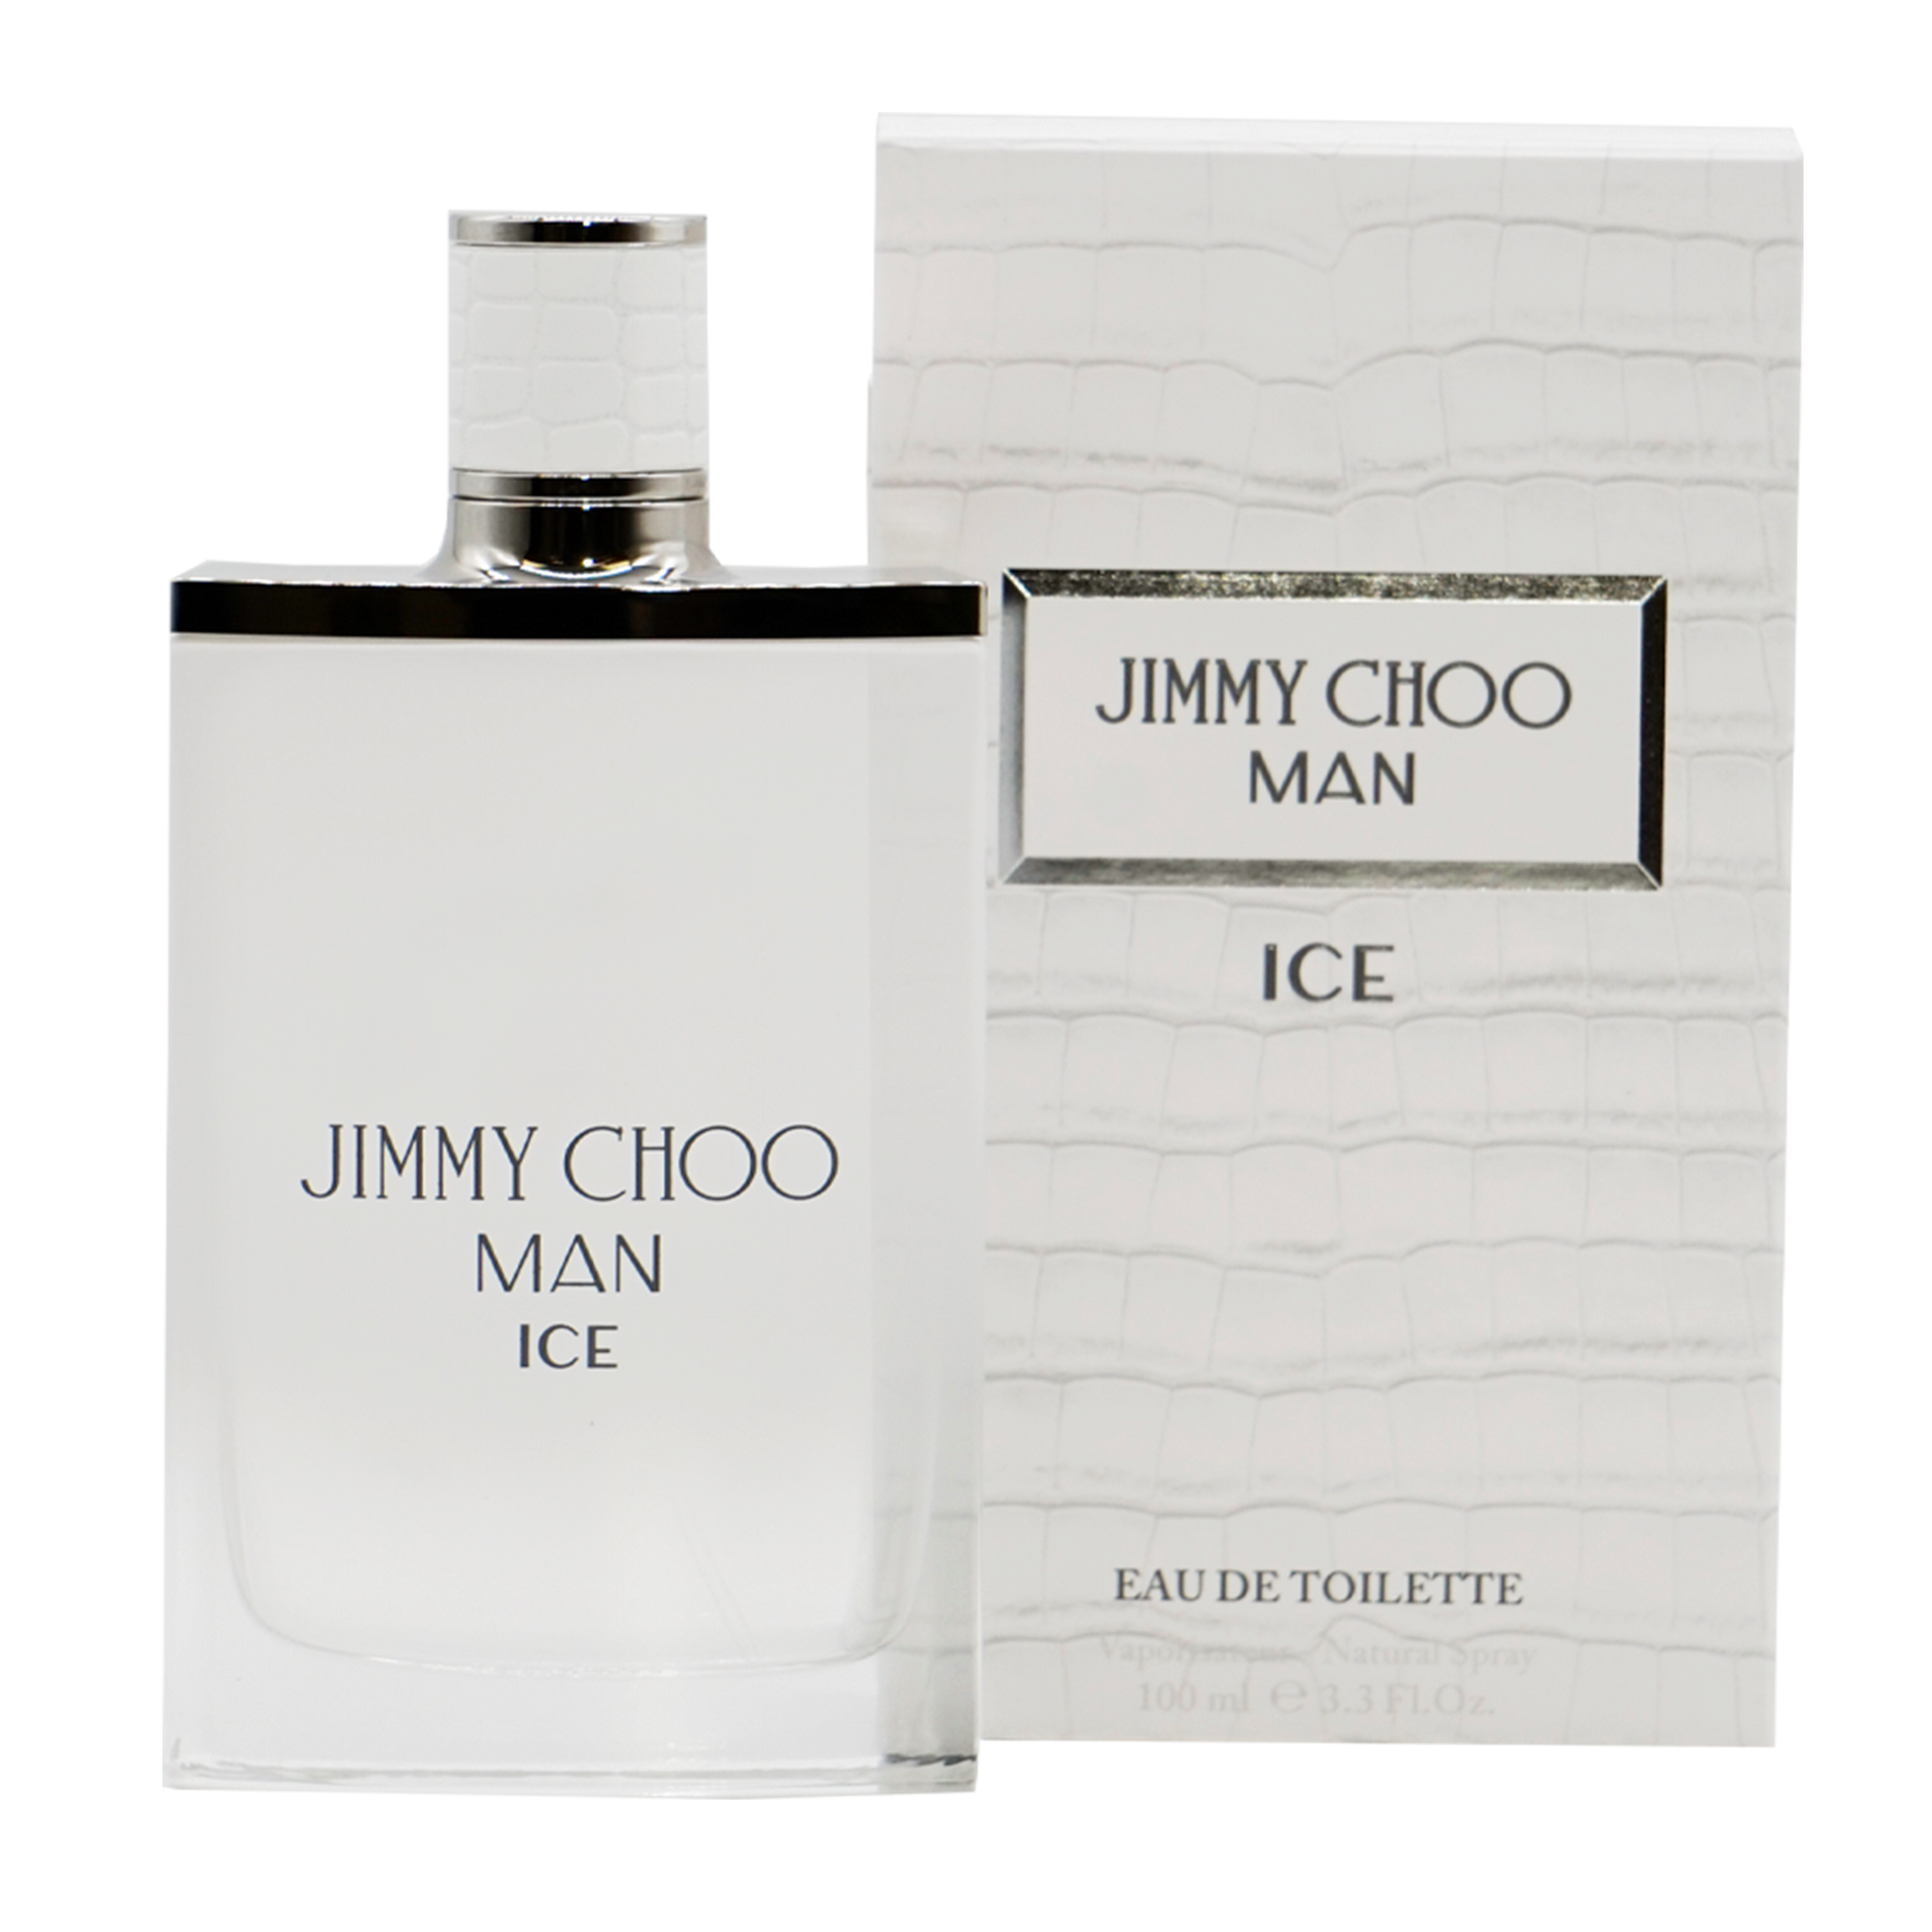  - Jimmy Choo - 3.4 oz - Eau de Toilette - Fragrance - 3386460082174 - Fragrance